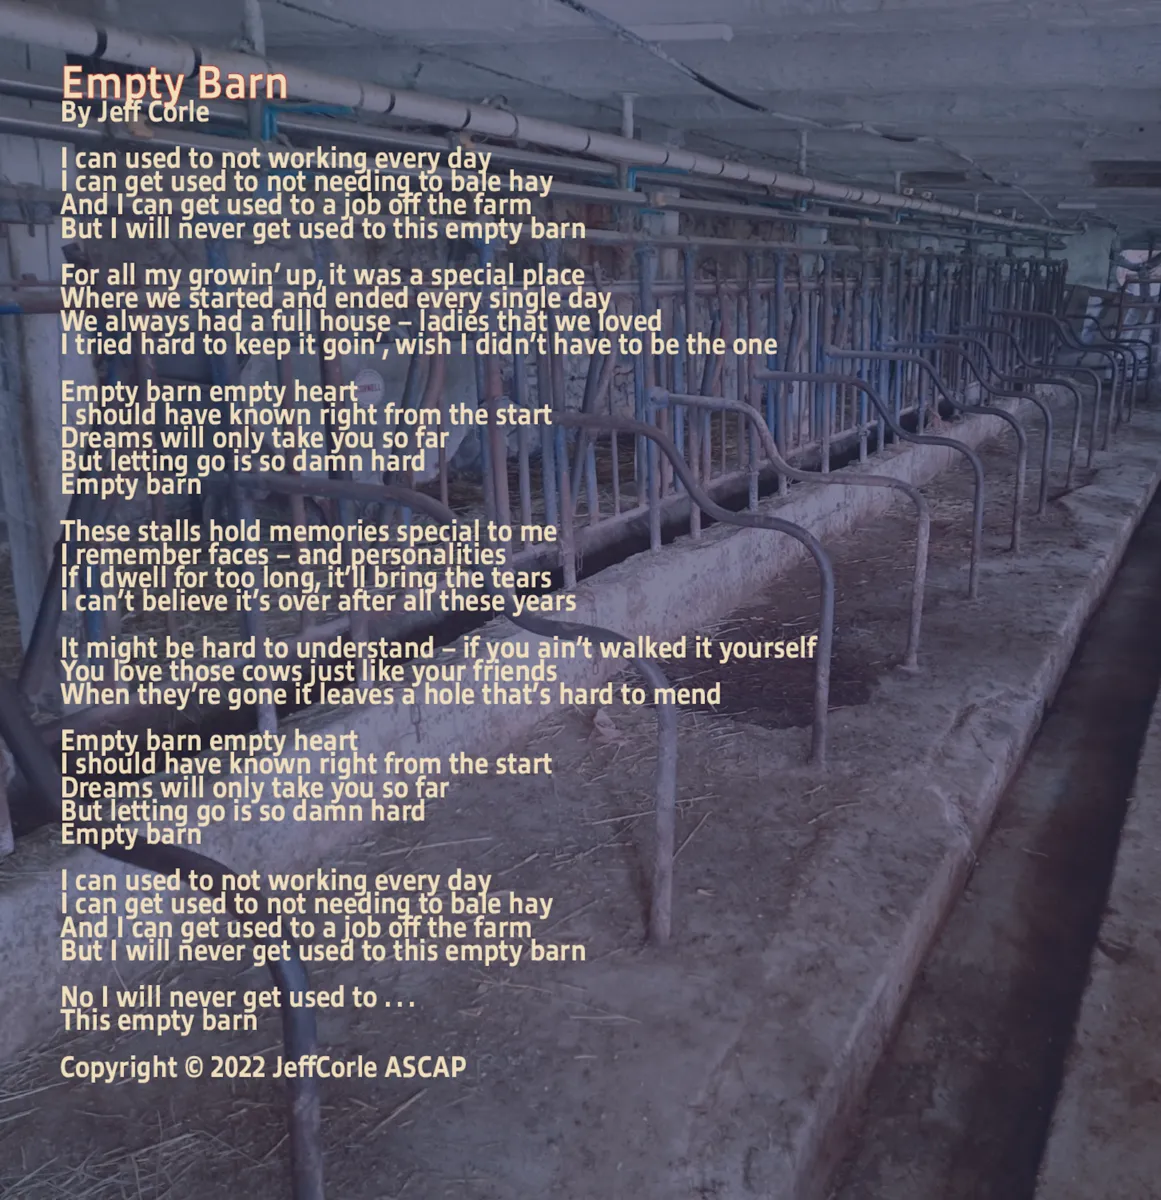 Empty Barn Lyric Sheet on Cardstock